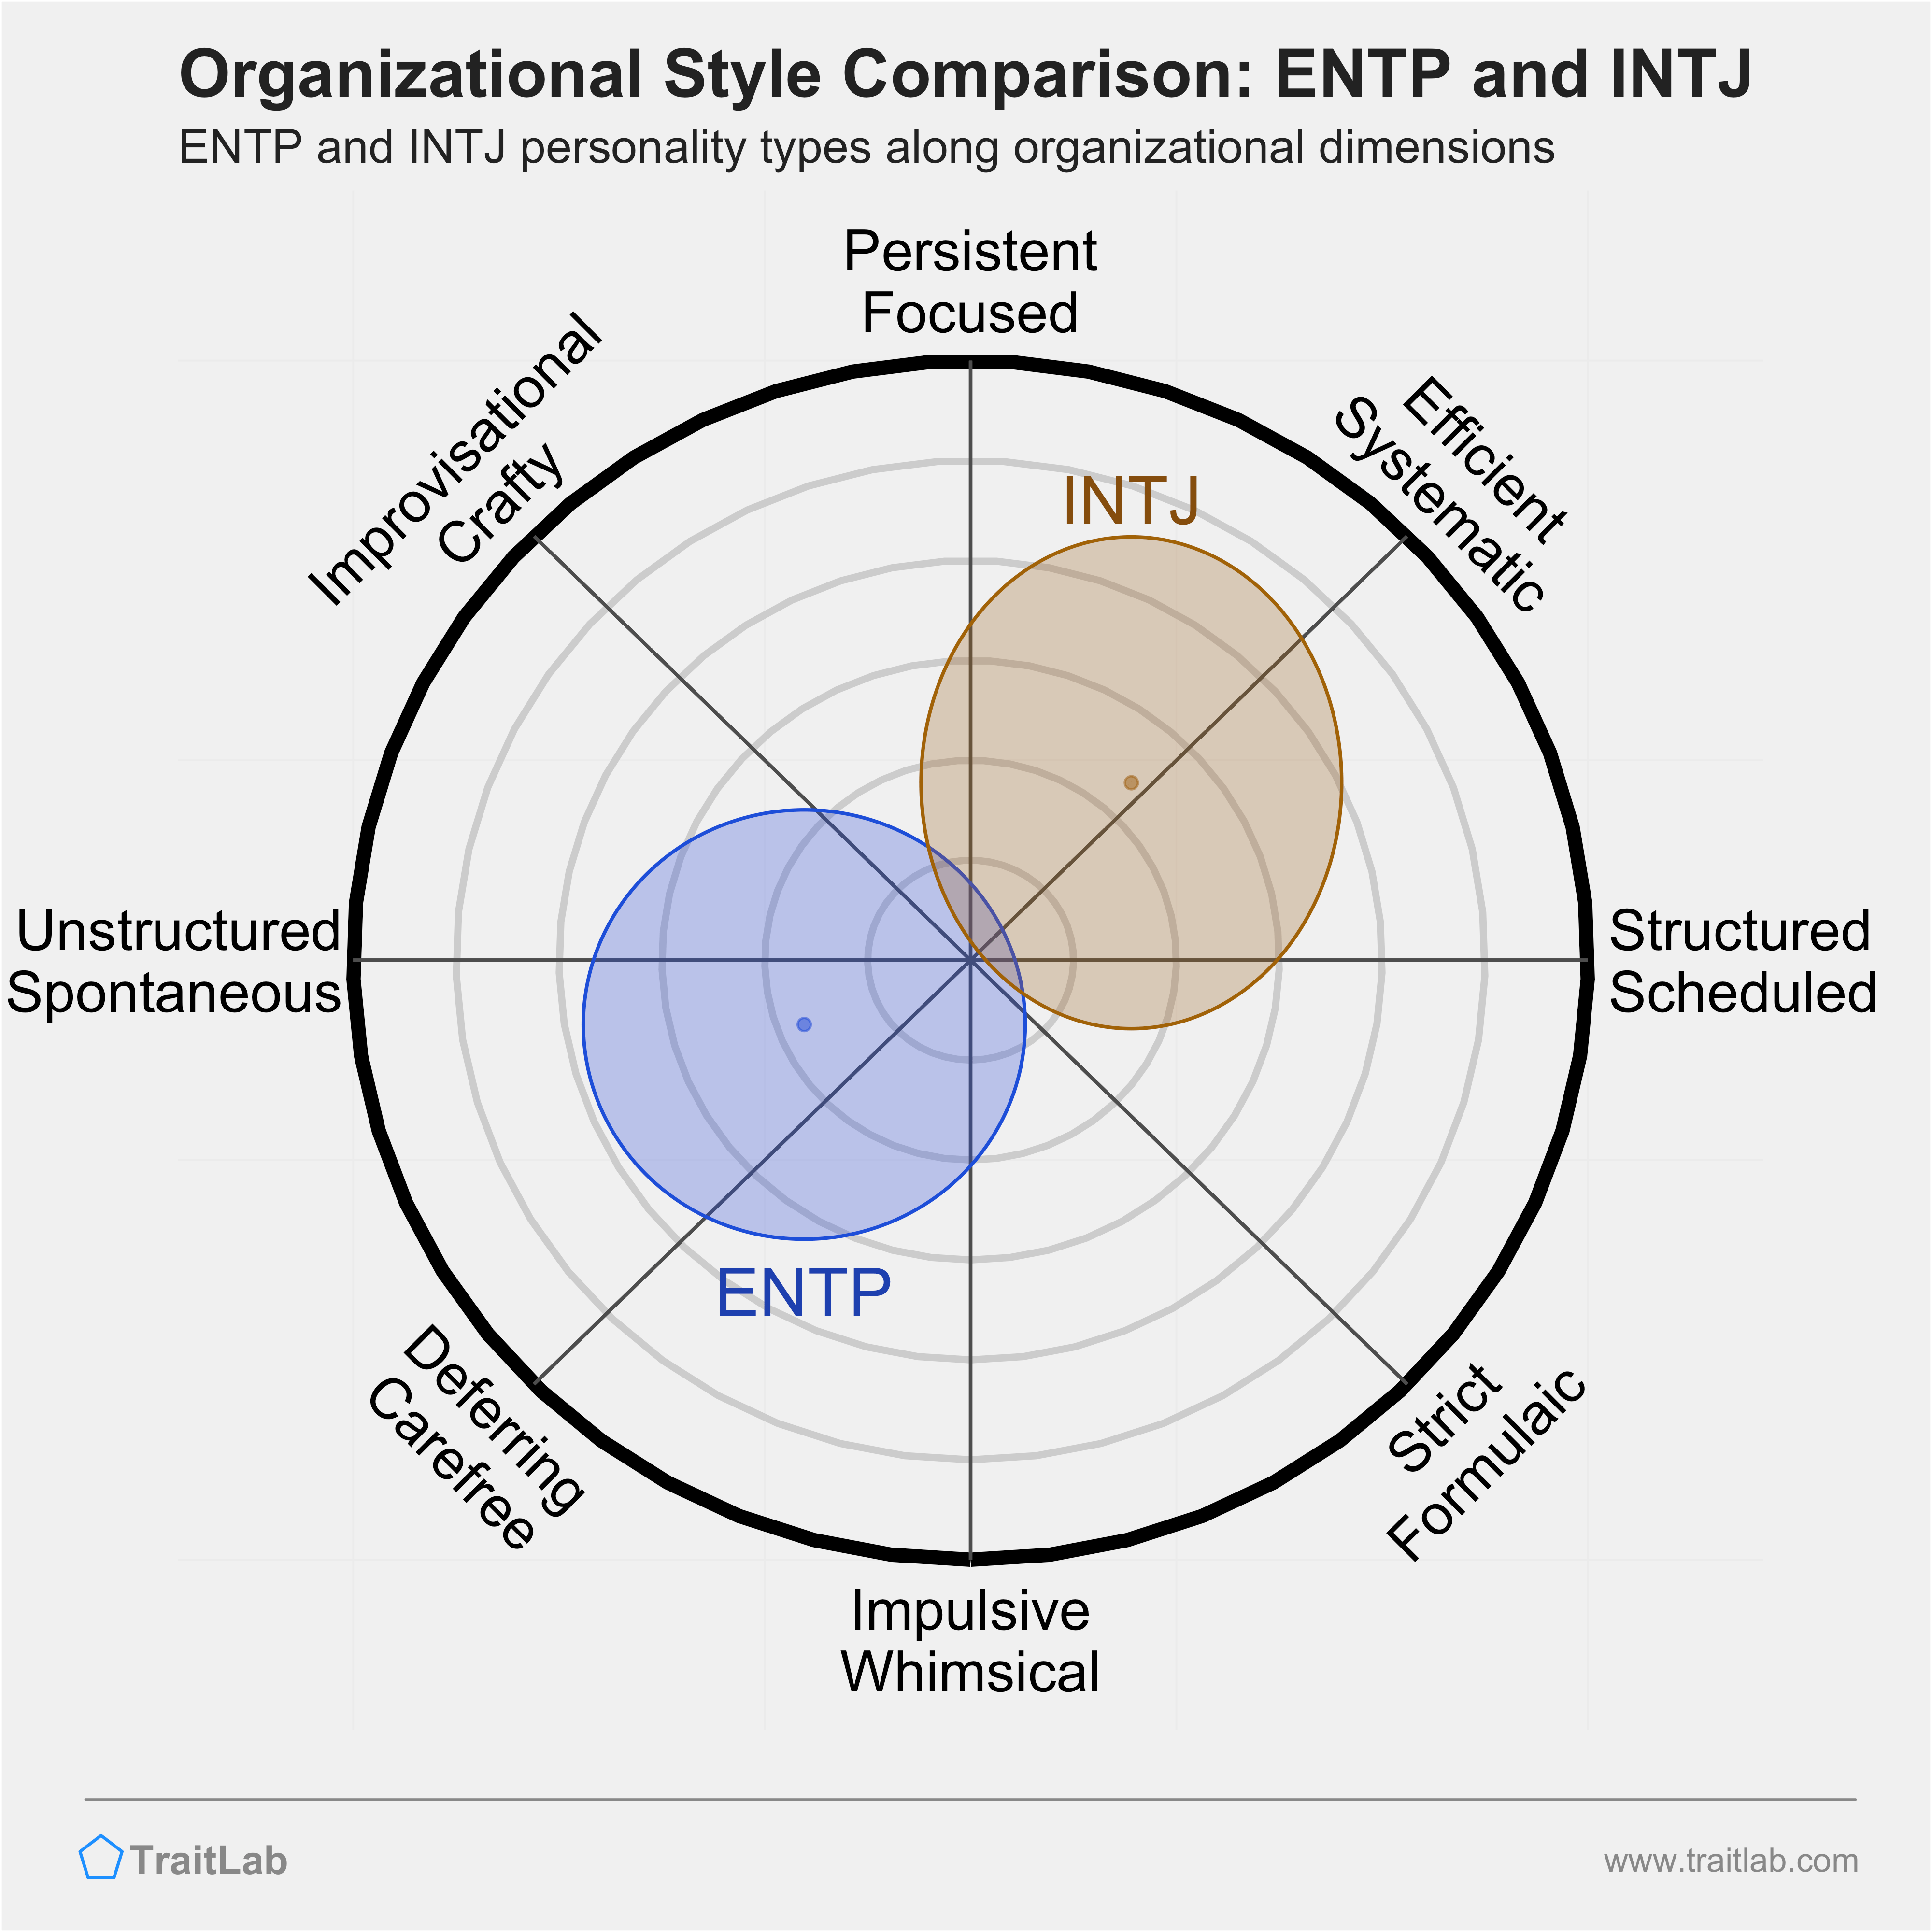 ENTP and INTJ comparison across organizational dimensions